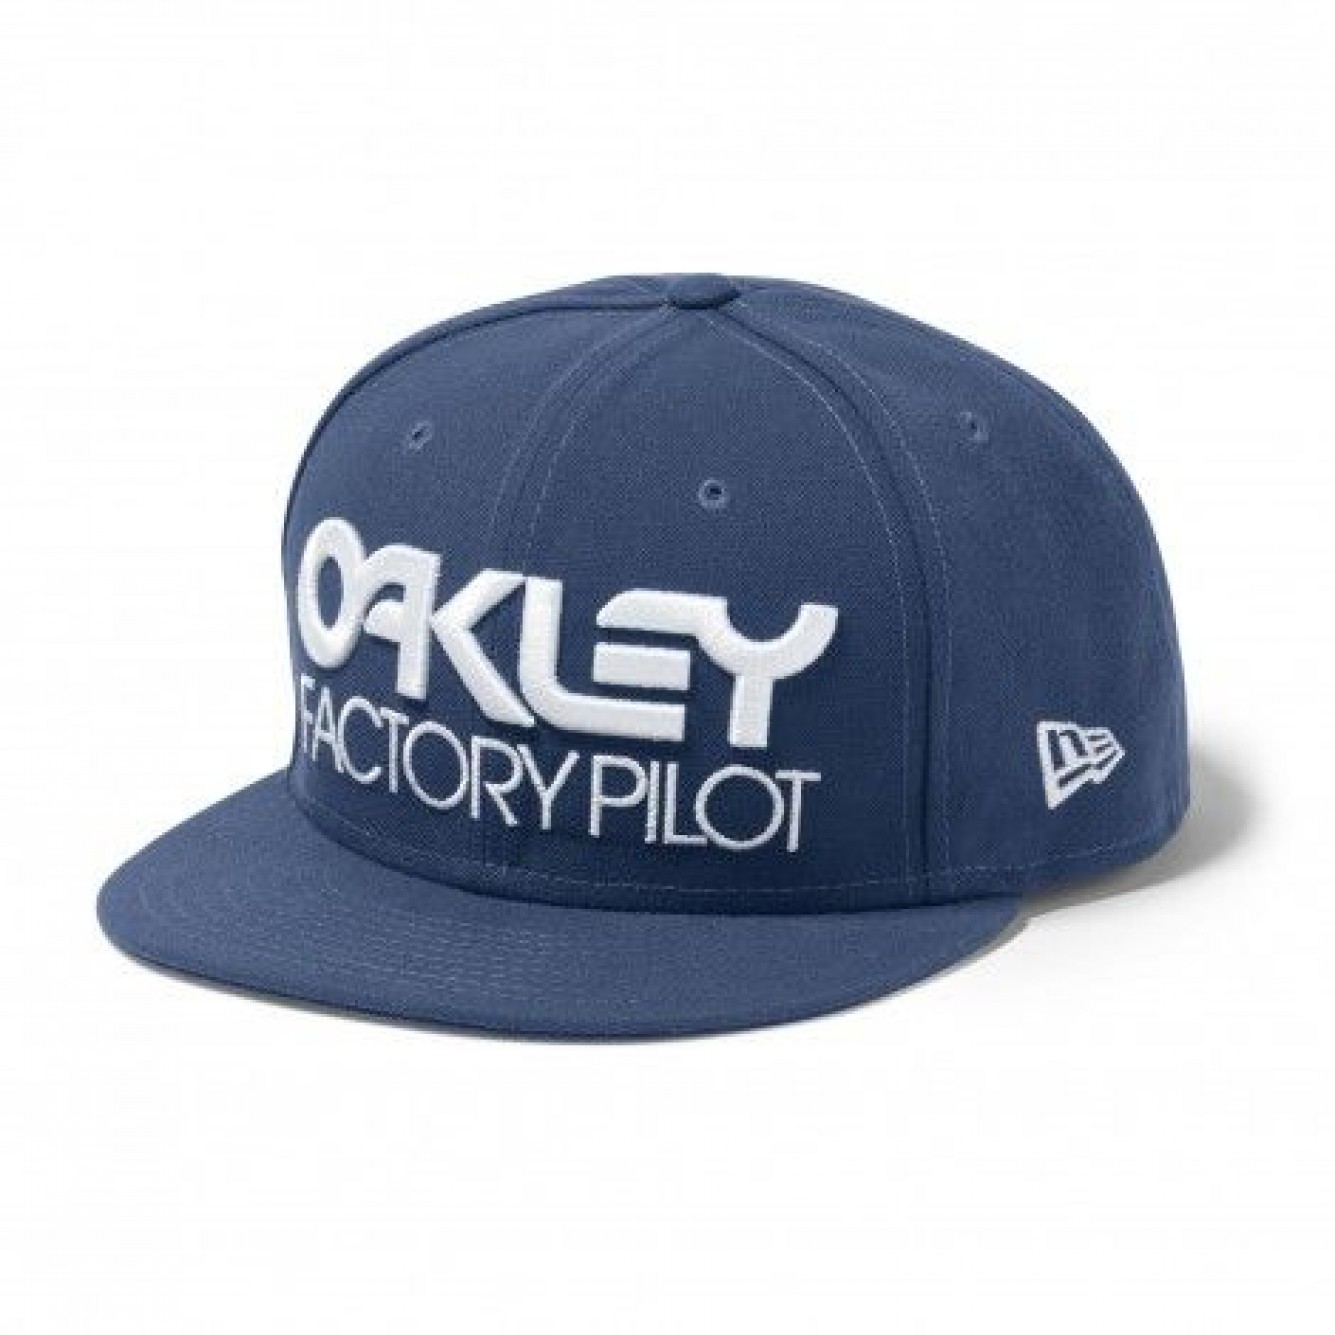 Oakley | Factory Pilot Novelty Snapback Blue Shade